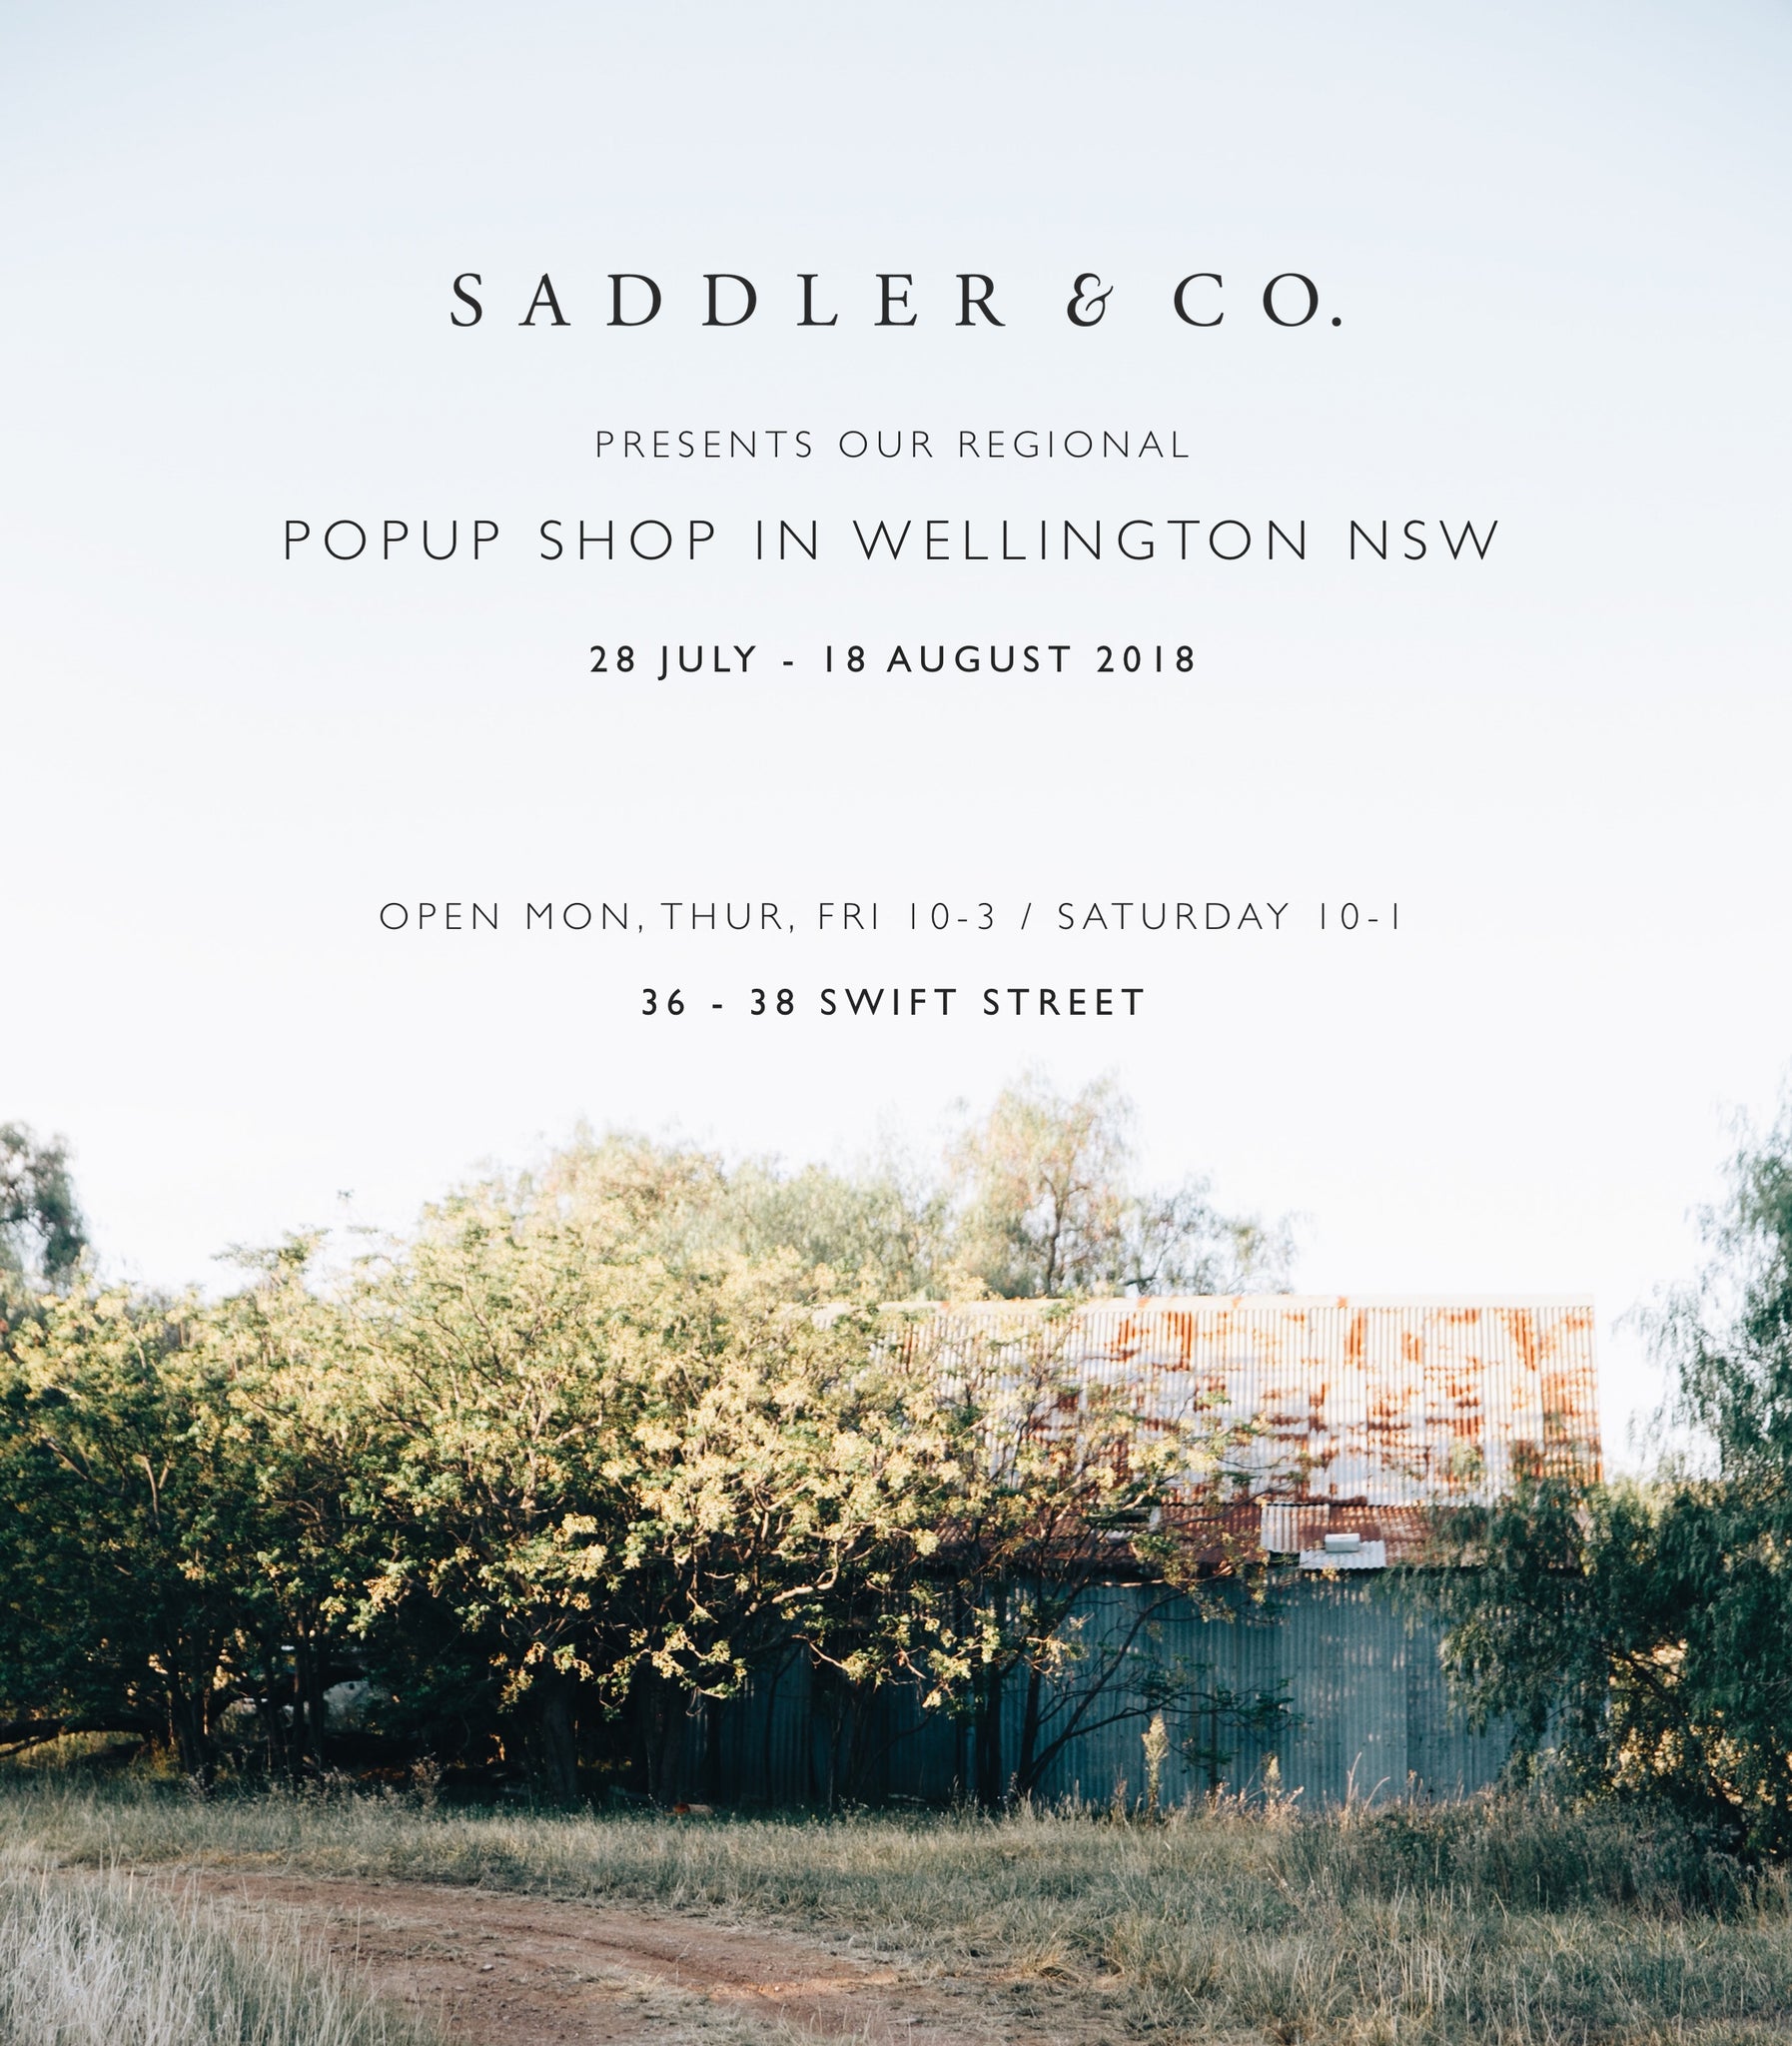 Saddler & Co Popup shop in Wellington NSW